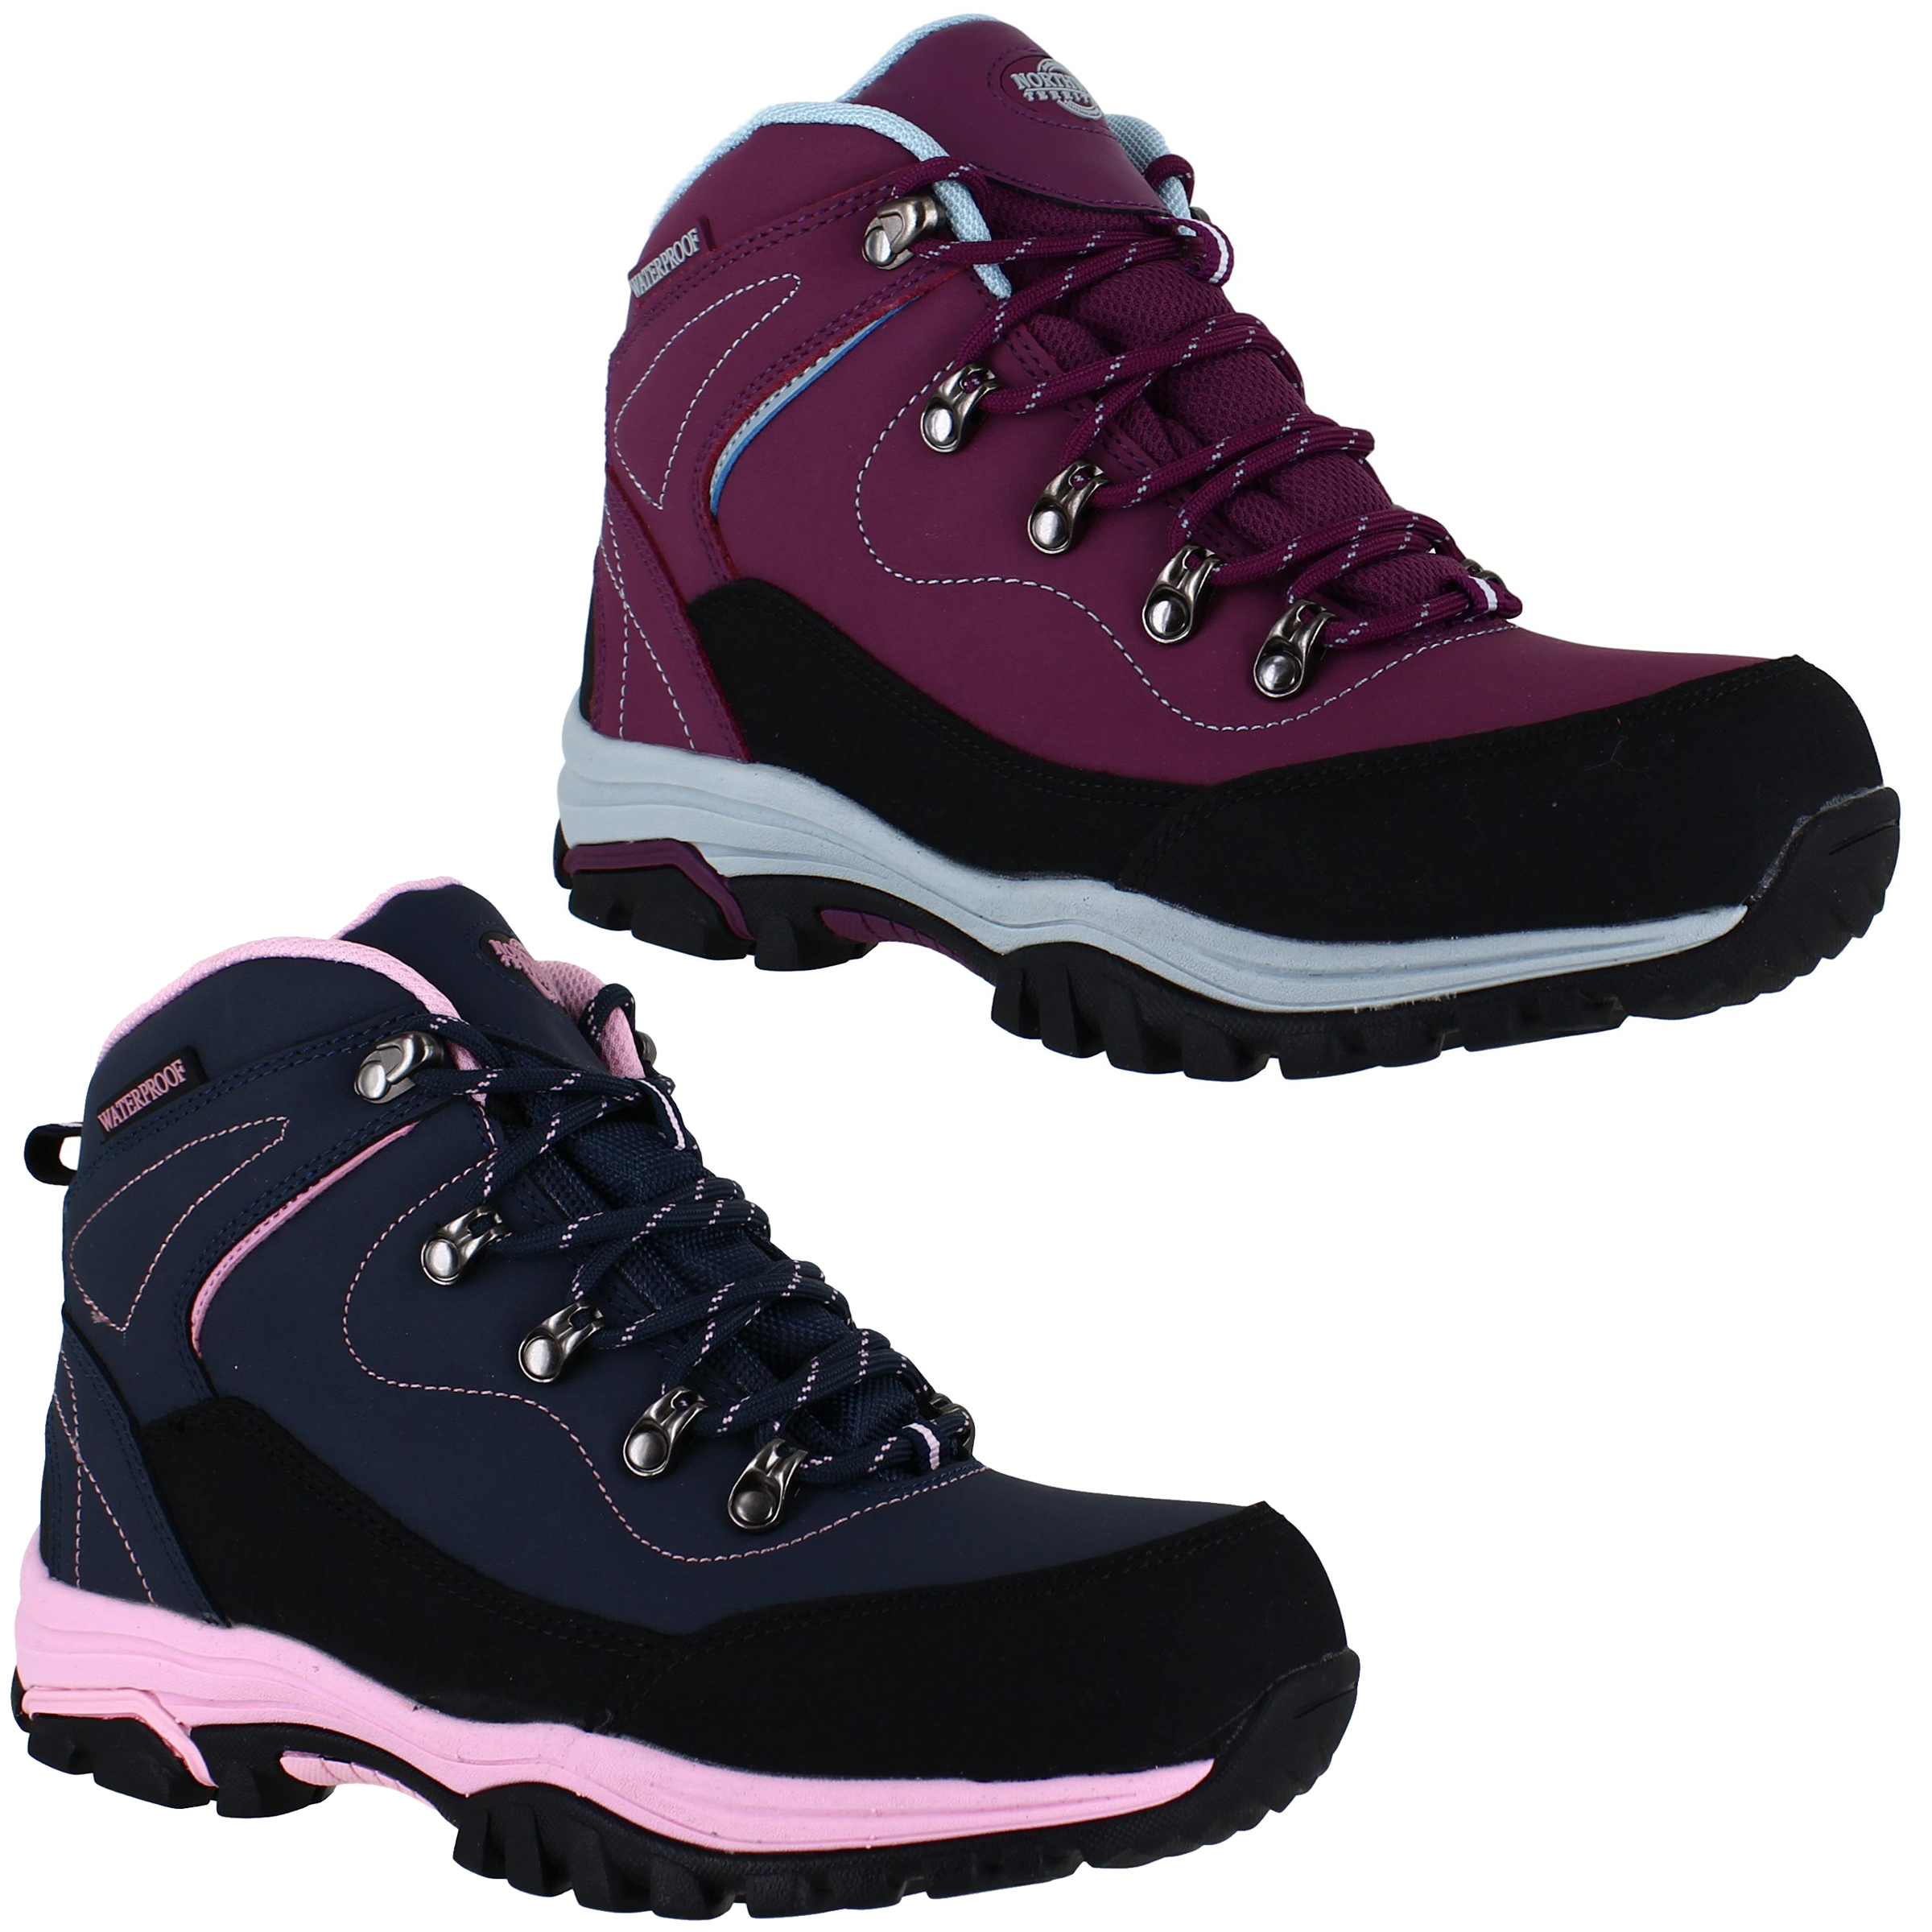 Womens Northwest Lightweight Hiking Waterproof Trek Walking Boots Sizes ...